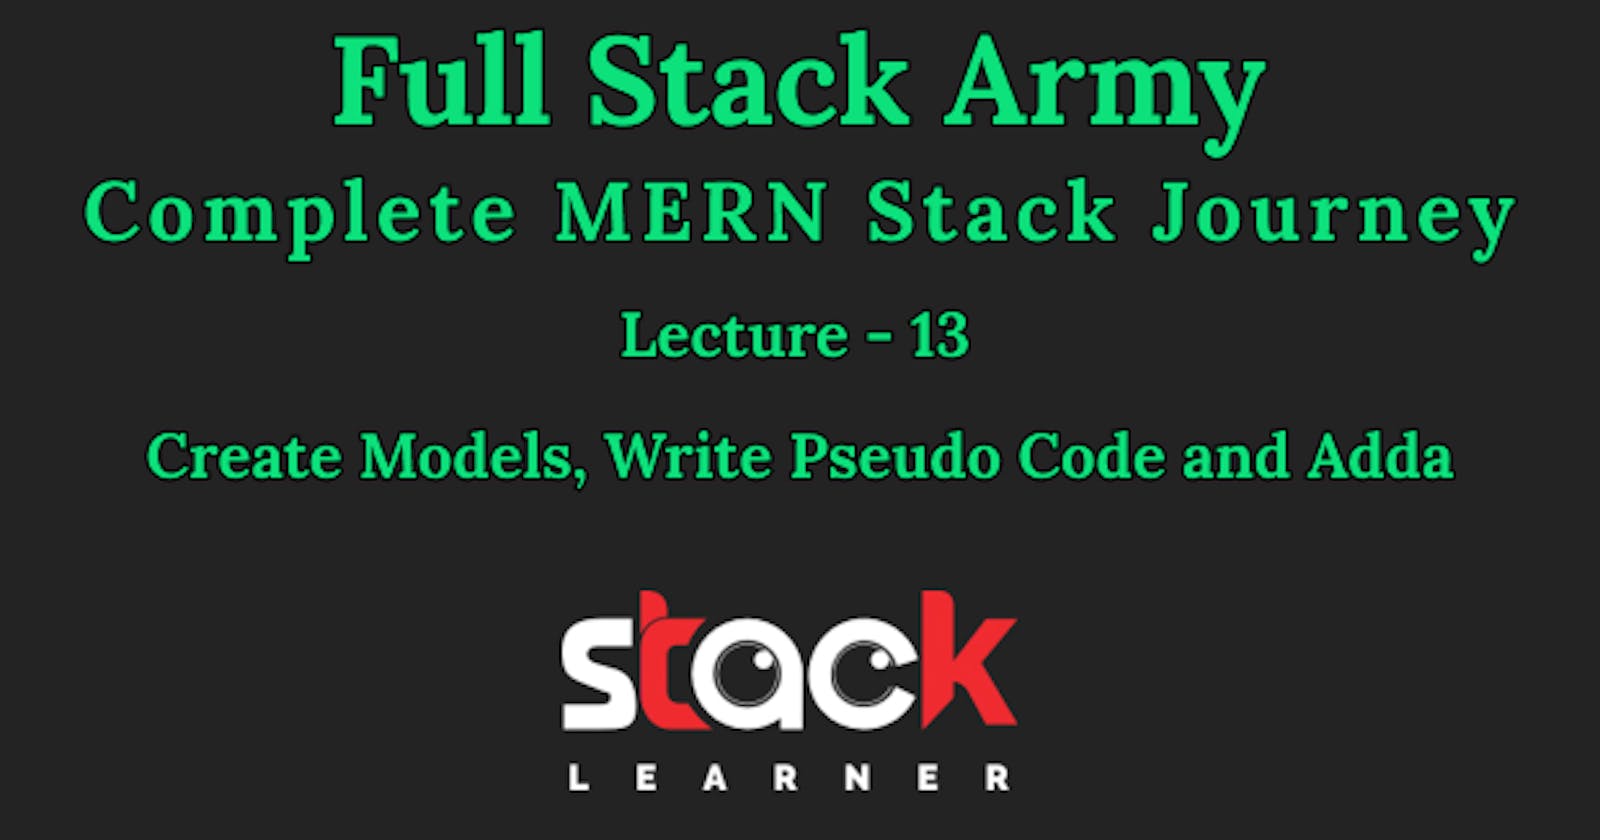 Lecture 13 - Create Models, Write Pseudo Code and Adda